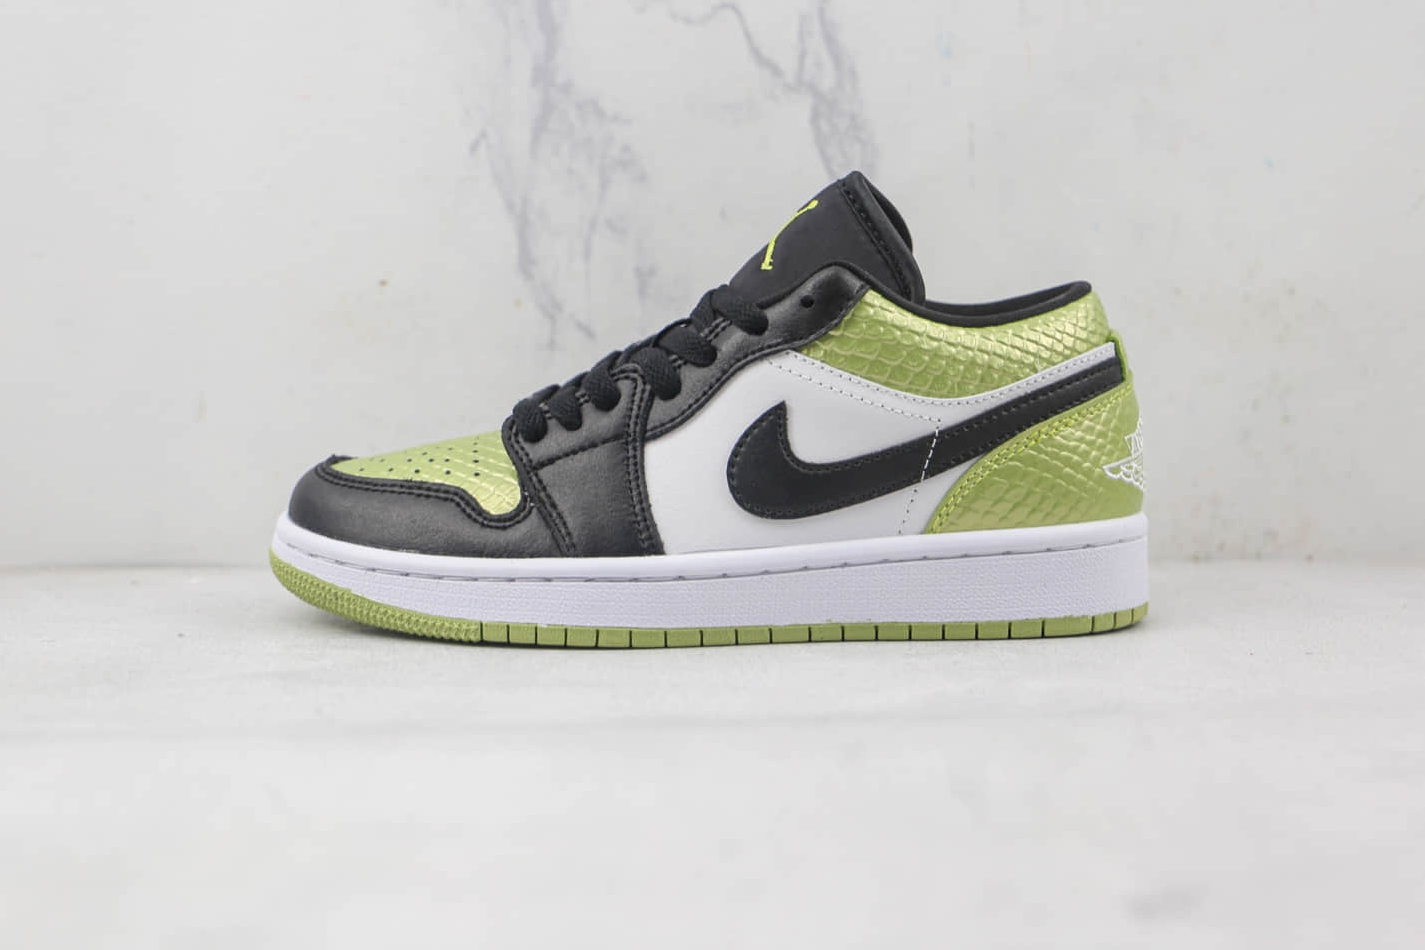 Air Jordan 1 Low SE 'Vivid Green Snakeskin' DX4446-301 - Stylish and Bold Sneakers